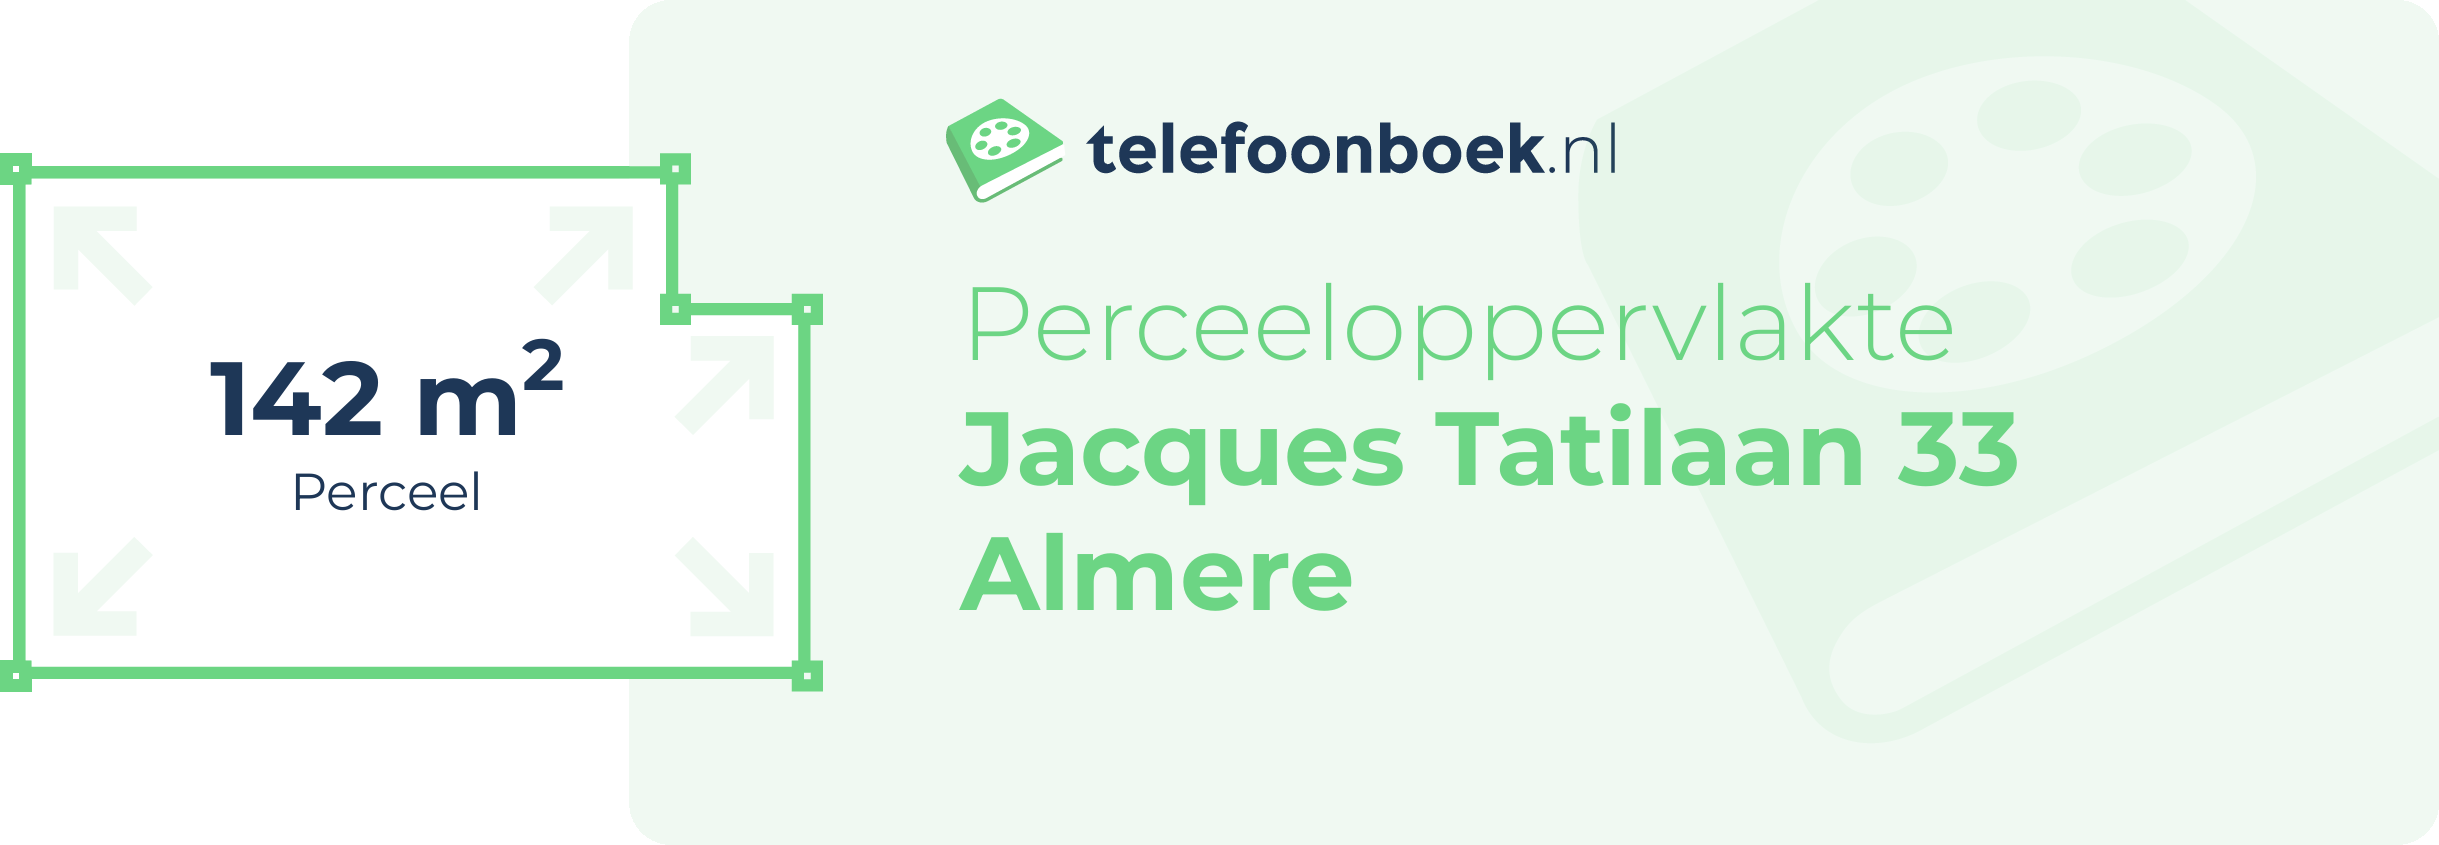 Perceeloppervlakte Jacques Tatilaan 33 Almere